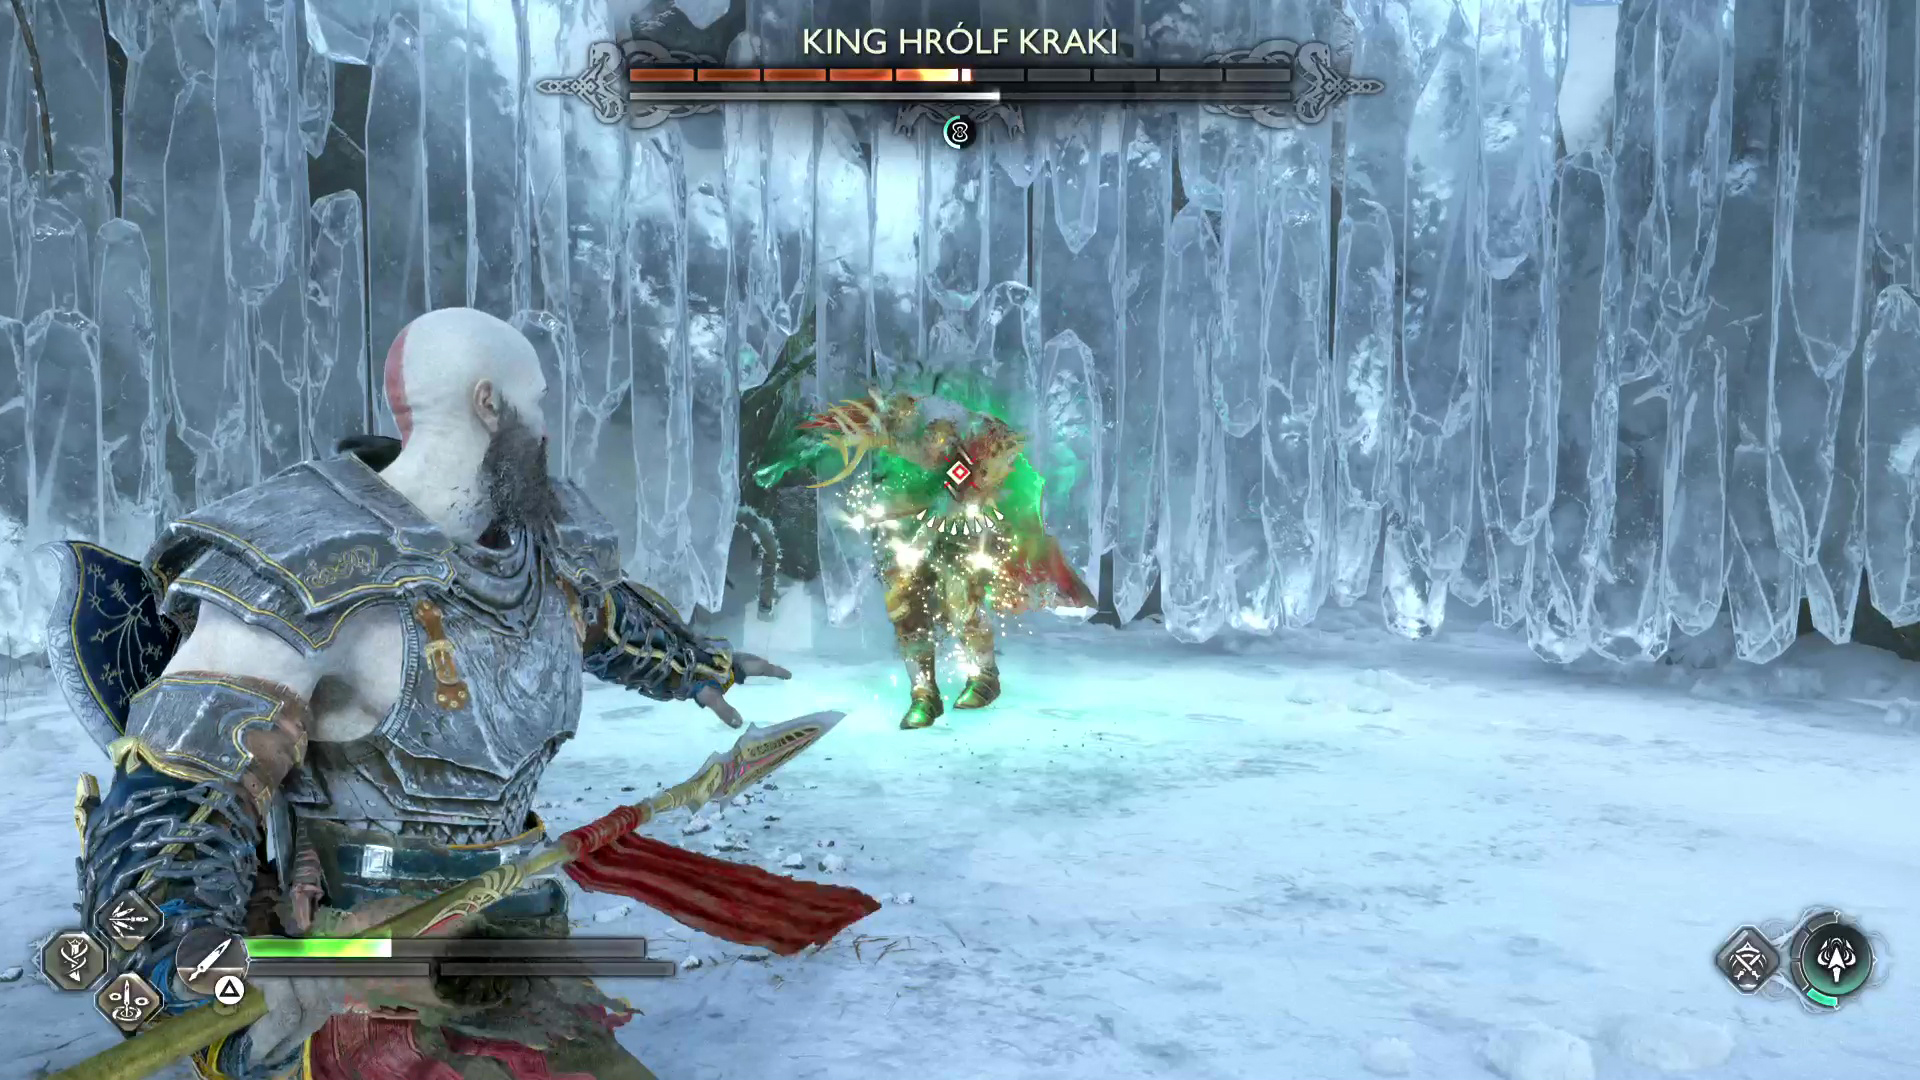 Keep throwing your spear at Kraki in-between attacks.